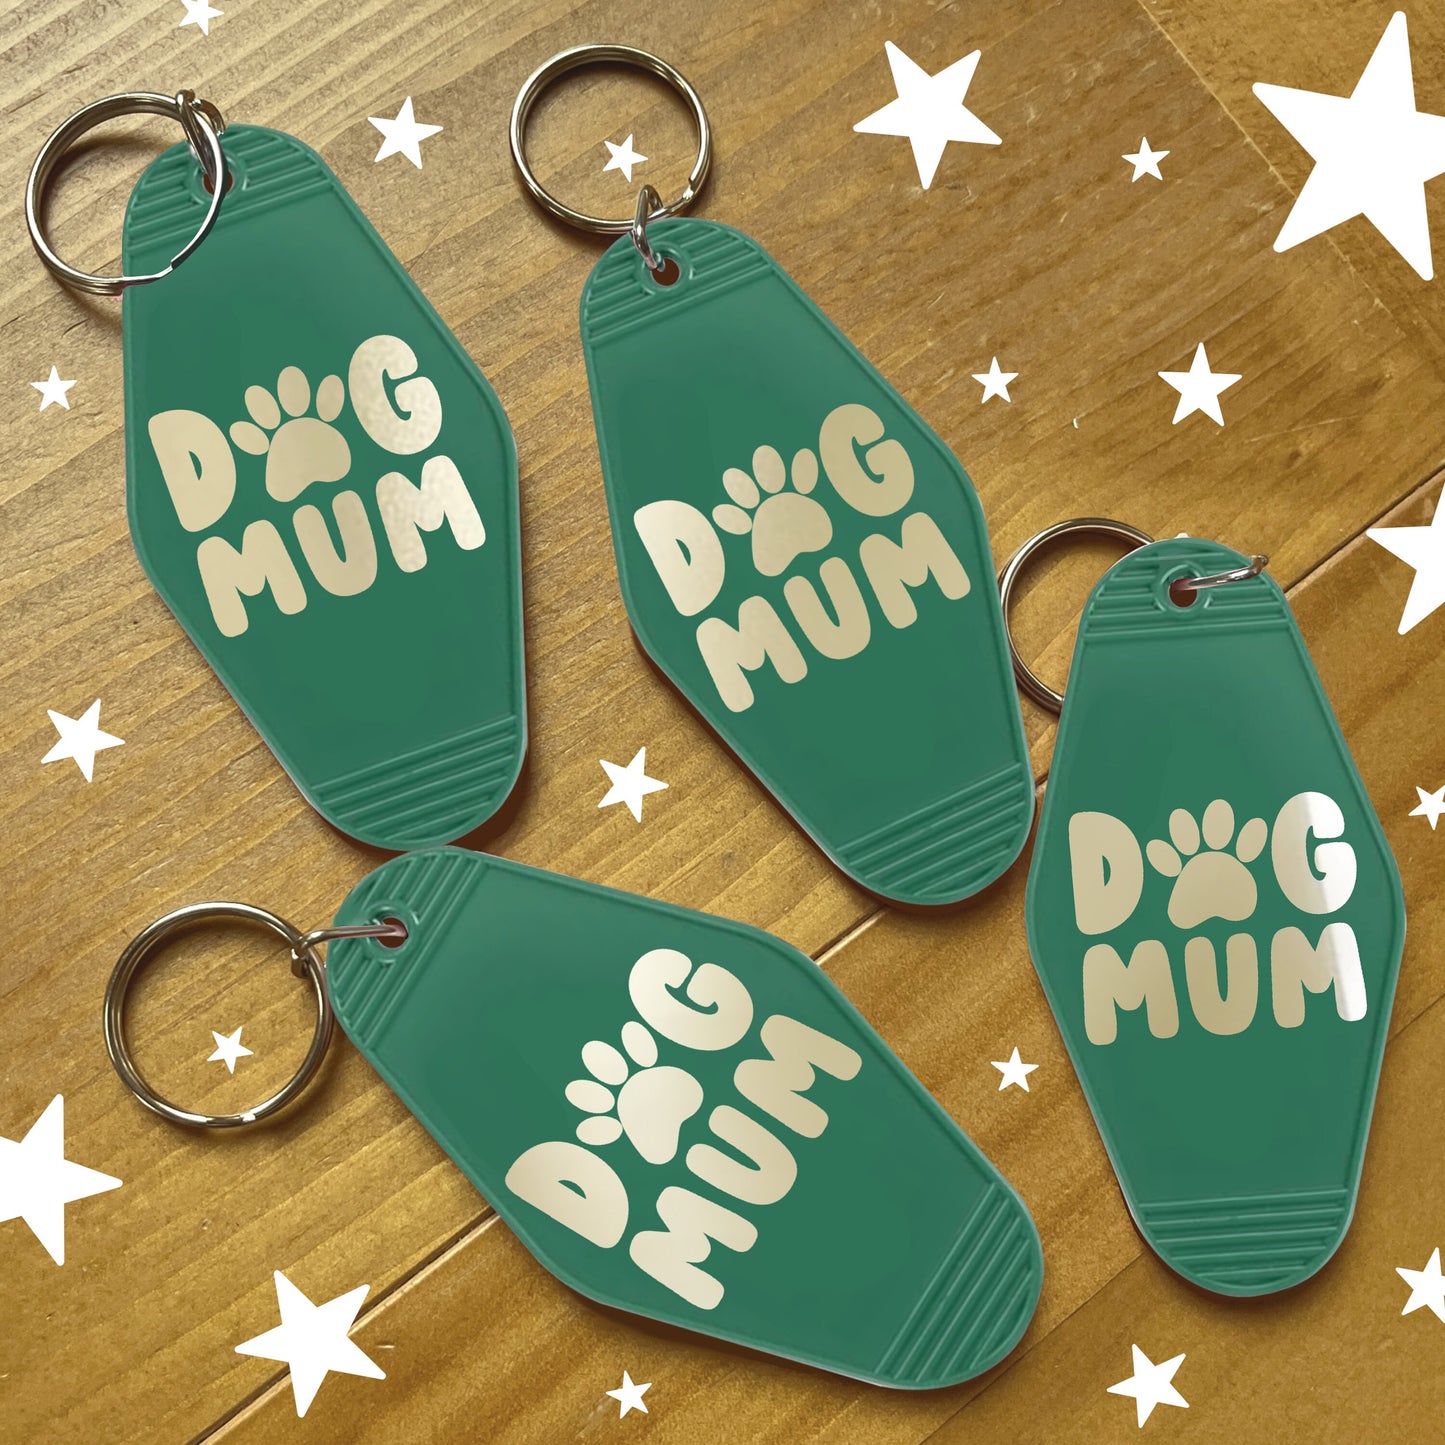 Dog Mum Keychain | Green Motel Style Keychains, Dog Gifts, Dog Owner Gifts, Dog Mom, Christmas Dog Gifts